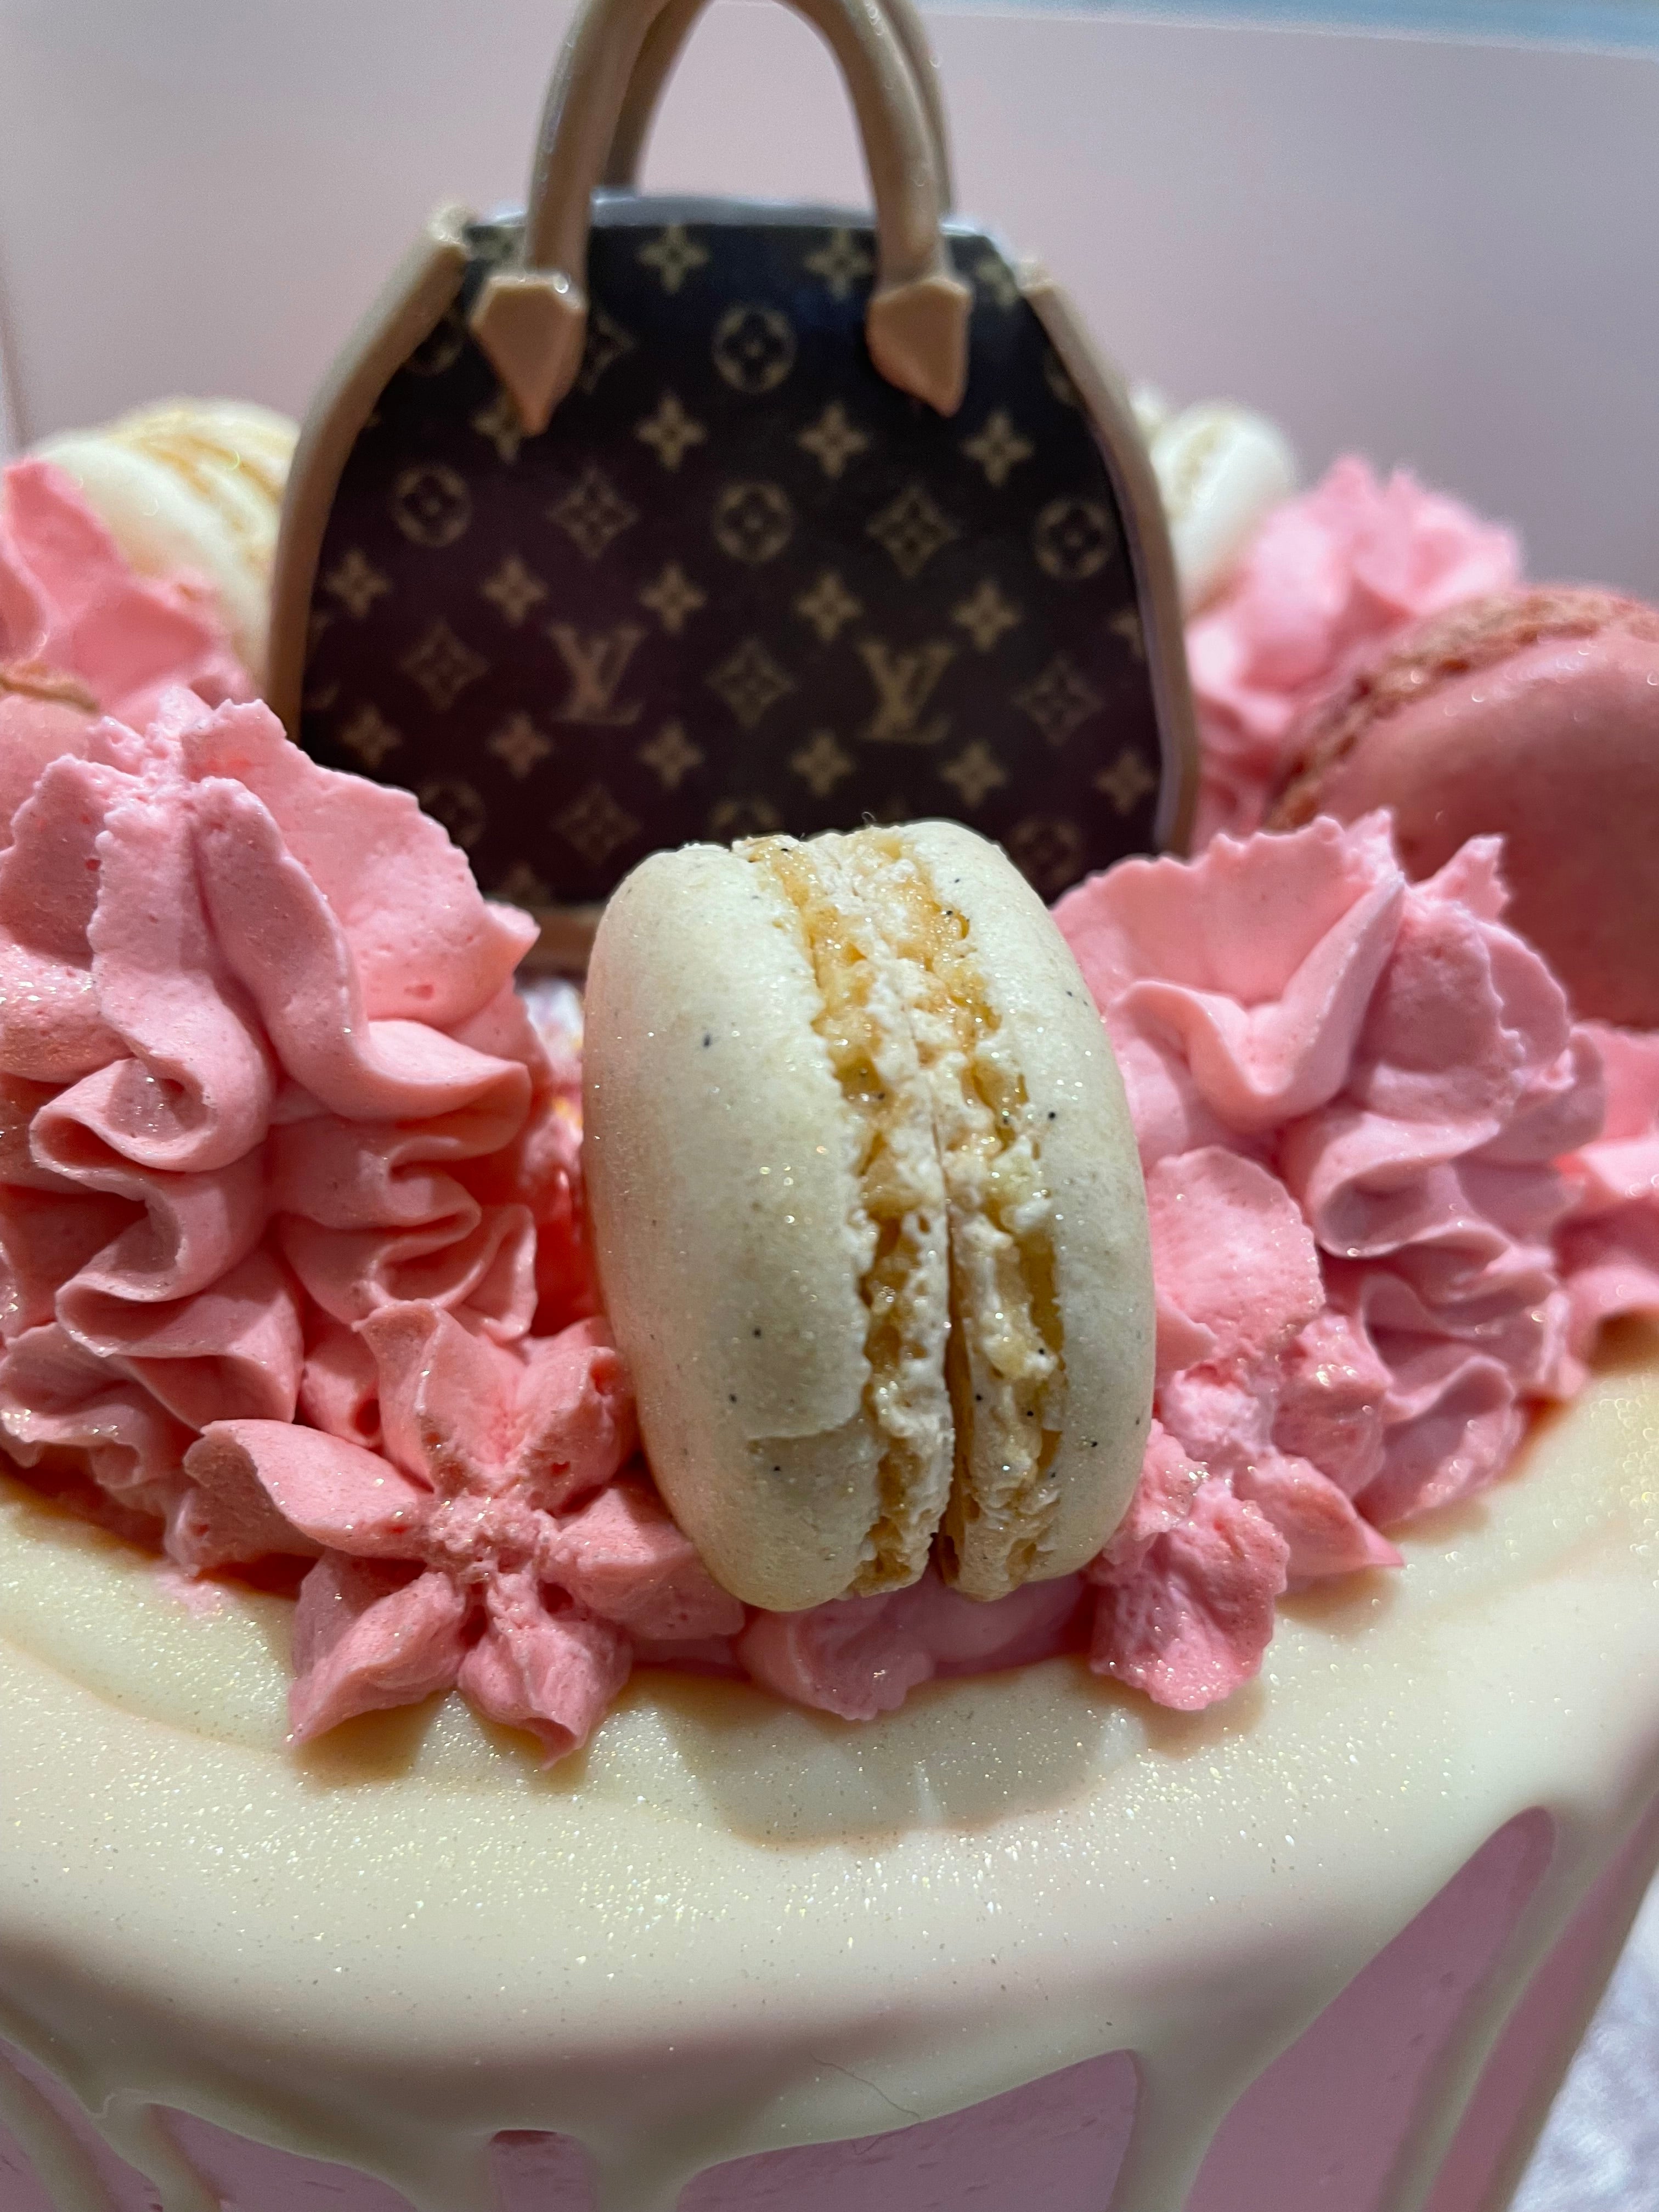 Sweets by Nish - Designer shopping bag cake #designercake #cakedecorating  #cakesofinstagram #cakestagram #cakeoftheday #instacake #dessert #sweet  #food #cake #tiffanyandco #lv #louisvuitton #chanel #prada #gucci #fendi  #buttercreamcake #happycake